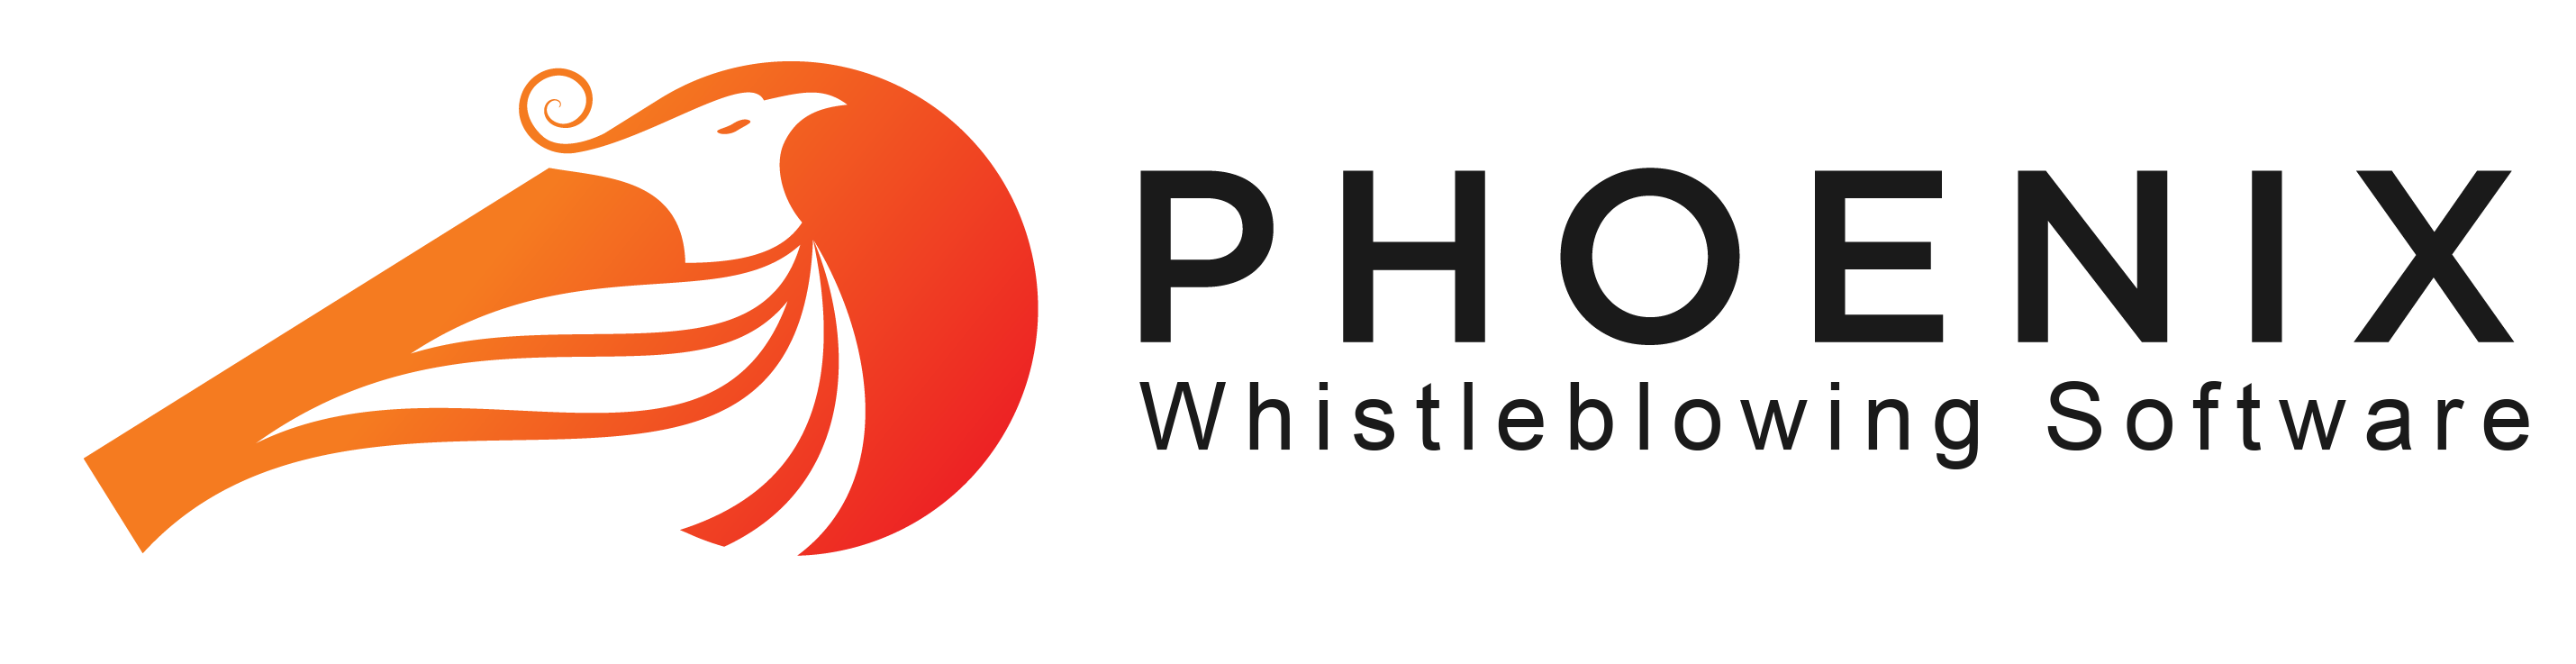 Phoenix Whistleblowing Software